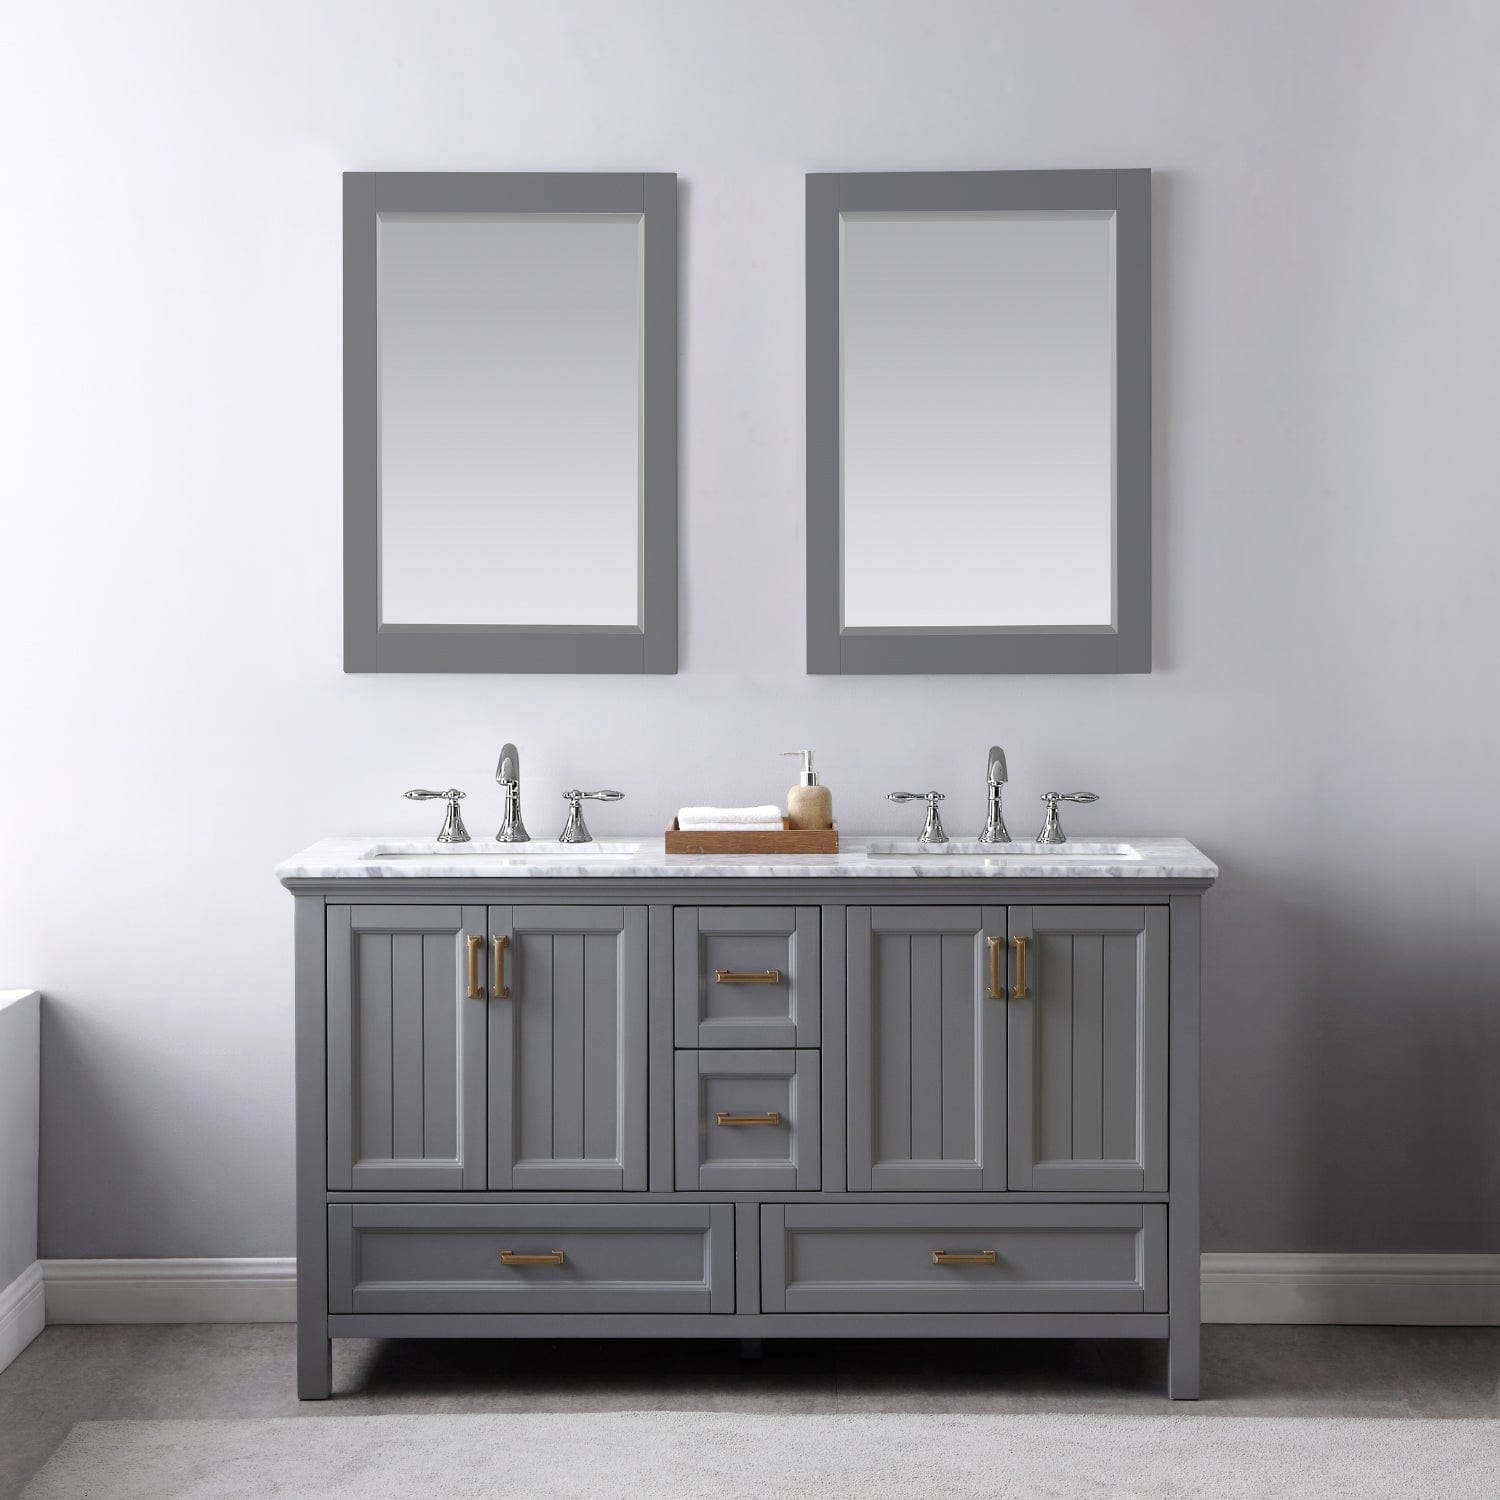 Altair Isla 60" Double Bathroom Vanity Set in Gray and Carrara White Marble Countertop with Mirror 538060-GR-CA - Molaix631112970891Vanity538060-GR-CA